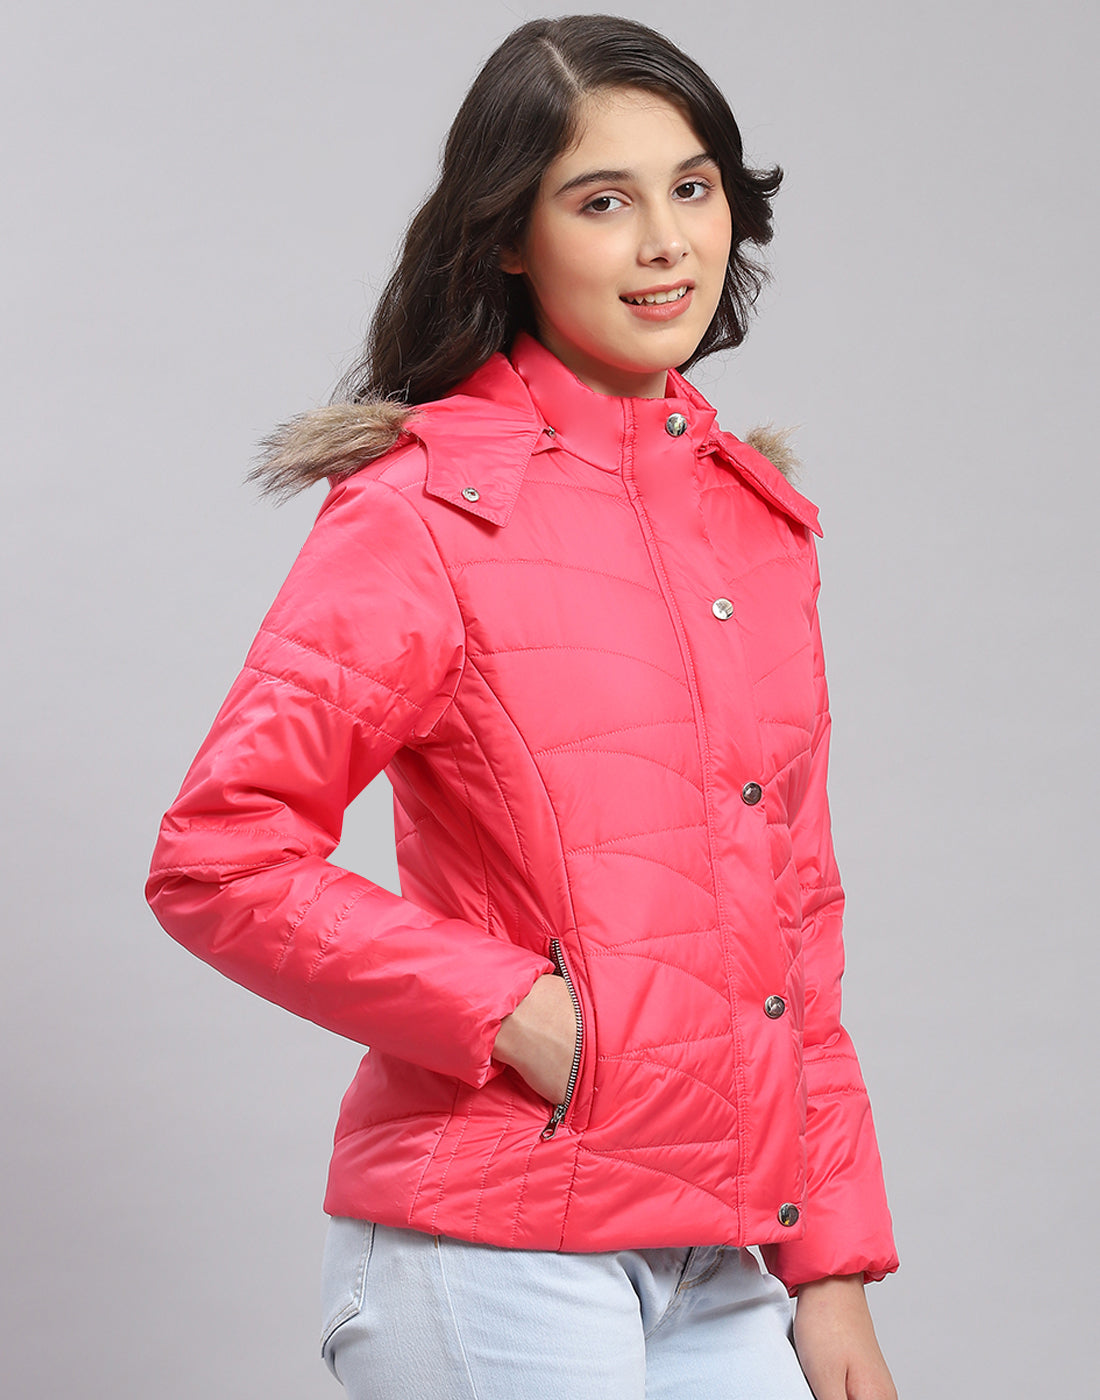 Girls Pink Solid Hooded Full Sleeve Girls Jacket